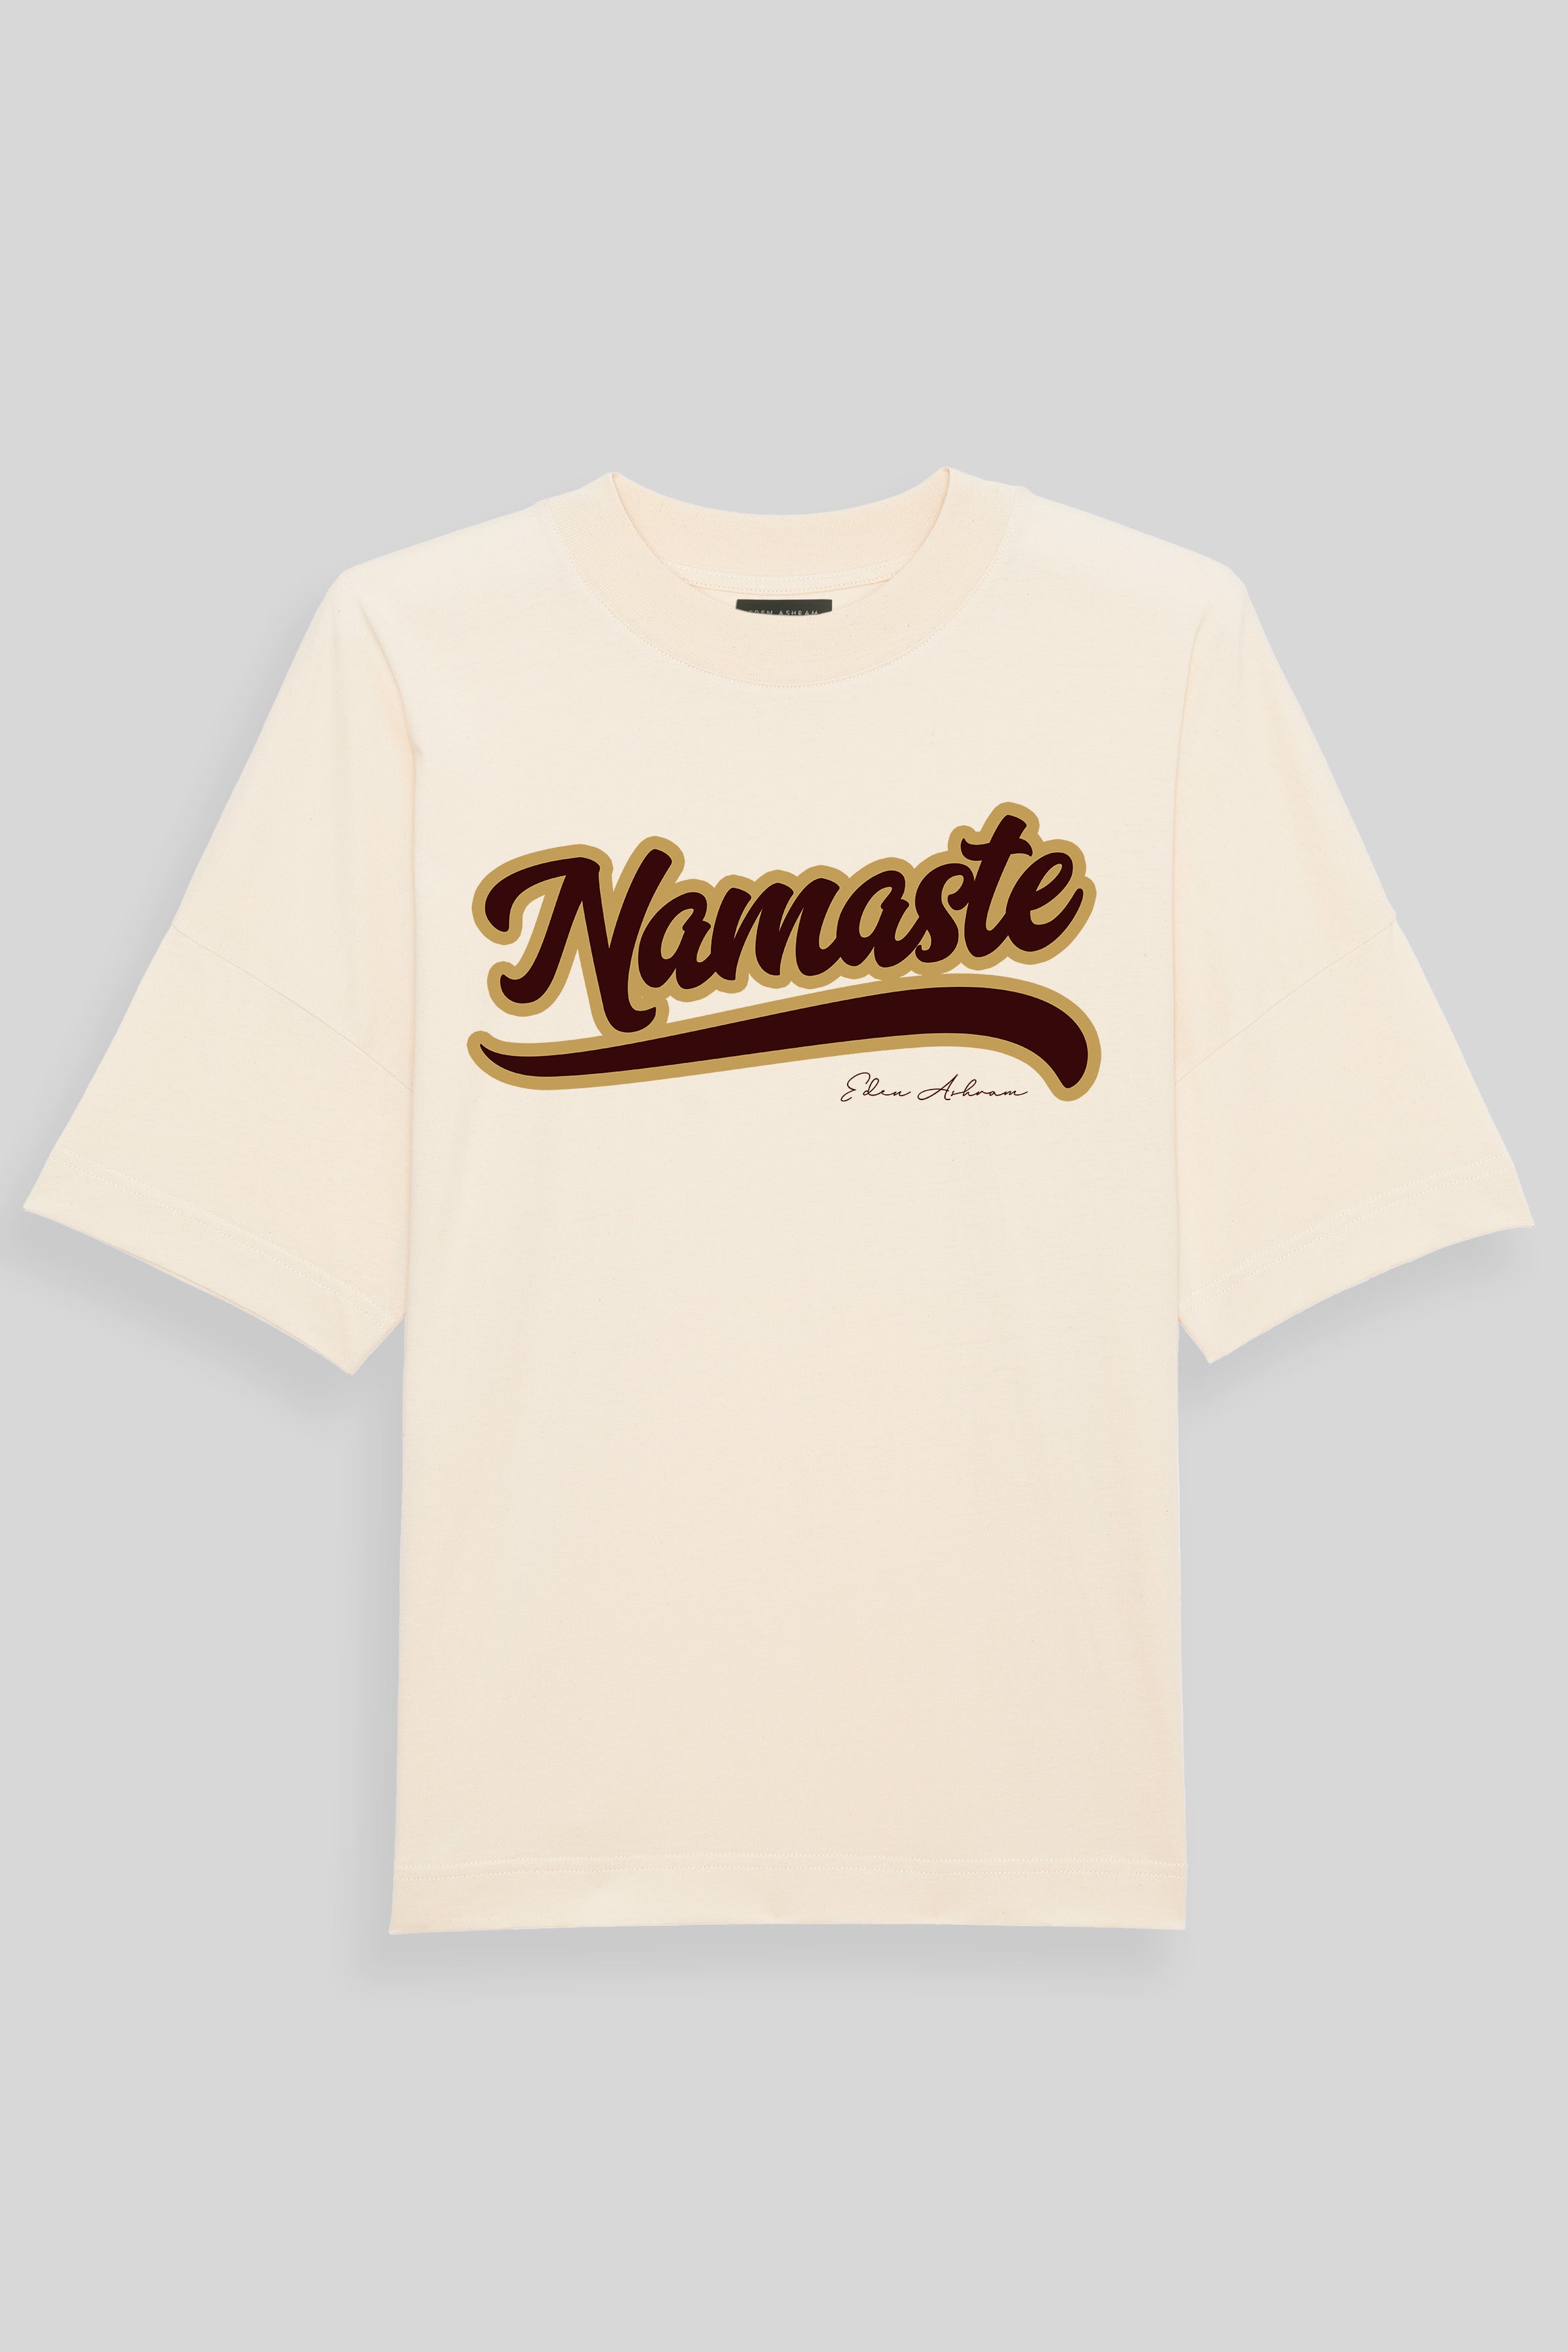 EDEN ASHRAM Namaste Oversized Organic Dropped Shoulder T-Shirt Natural Raw